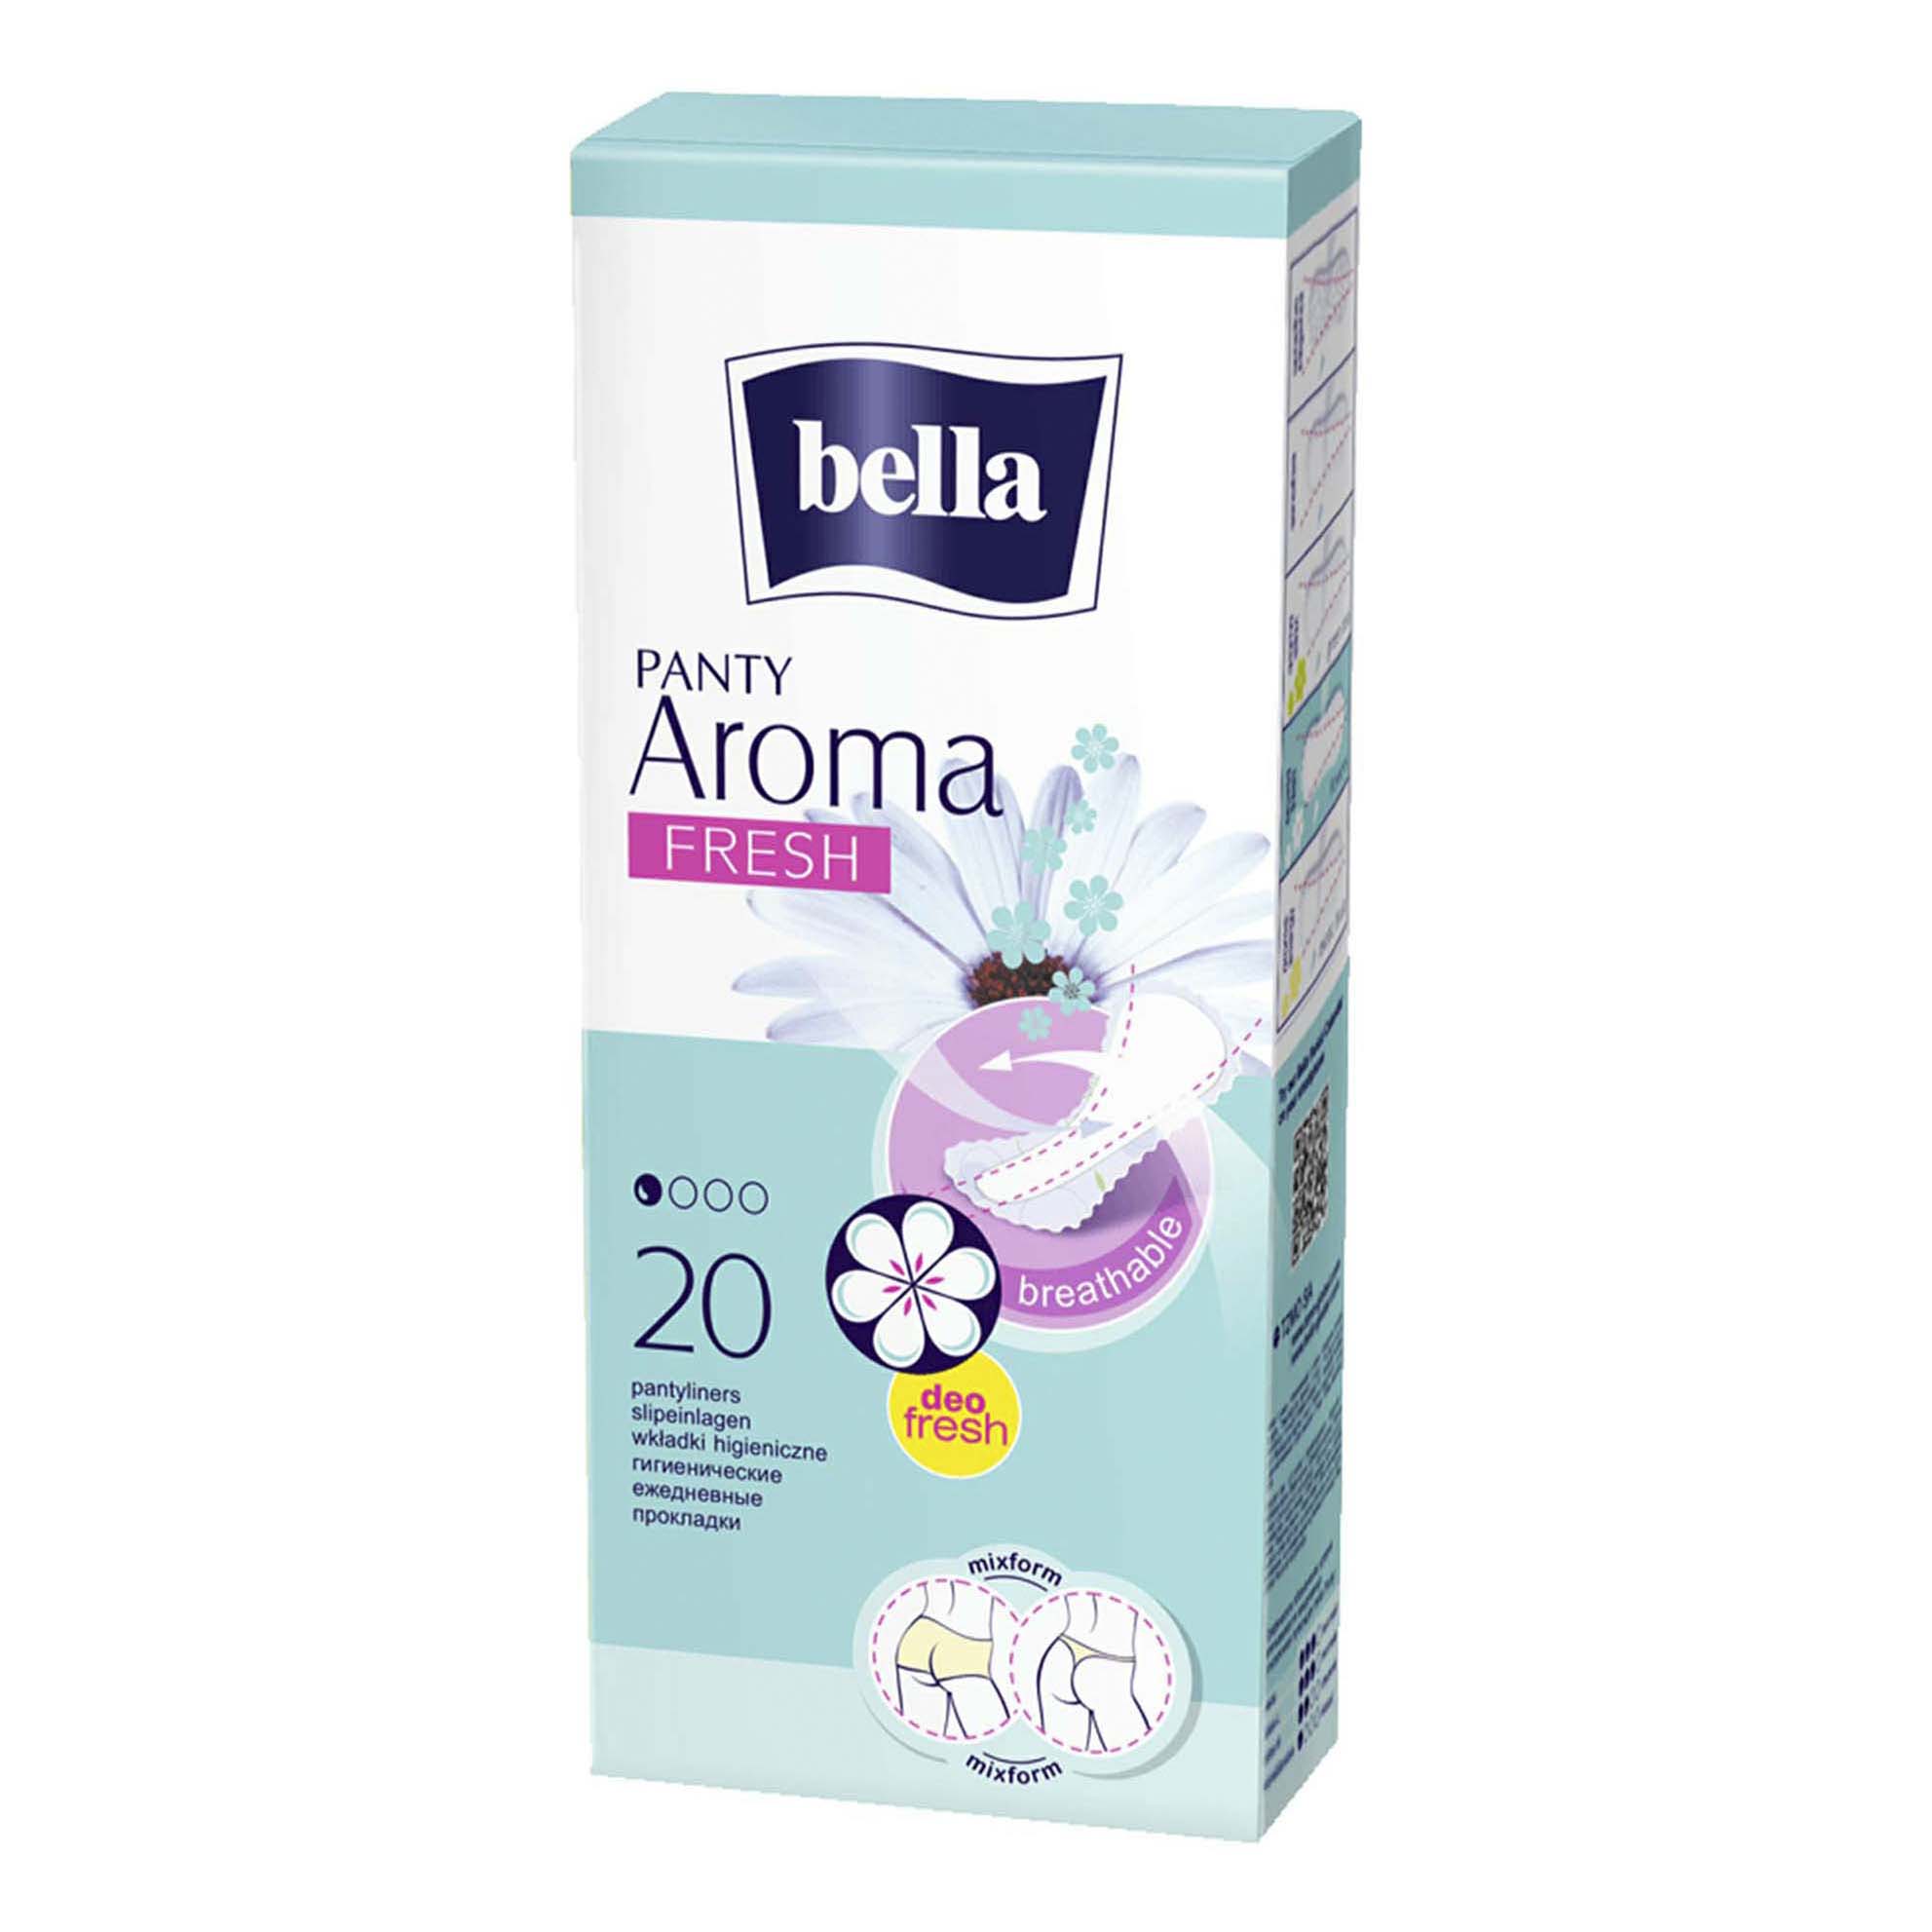 Прокладки Bella Panty aroma fresh ежедневные 20 шт прокладки cycle recycle ежедневные многоразовые голубой 1 шт